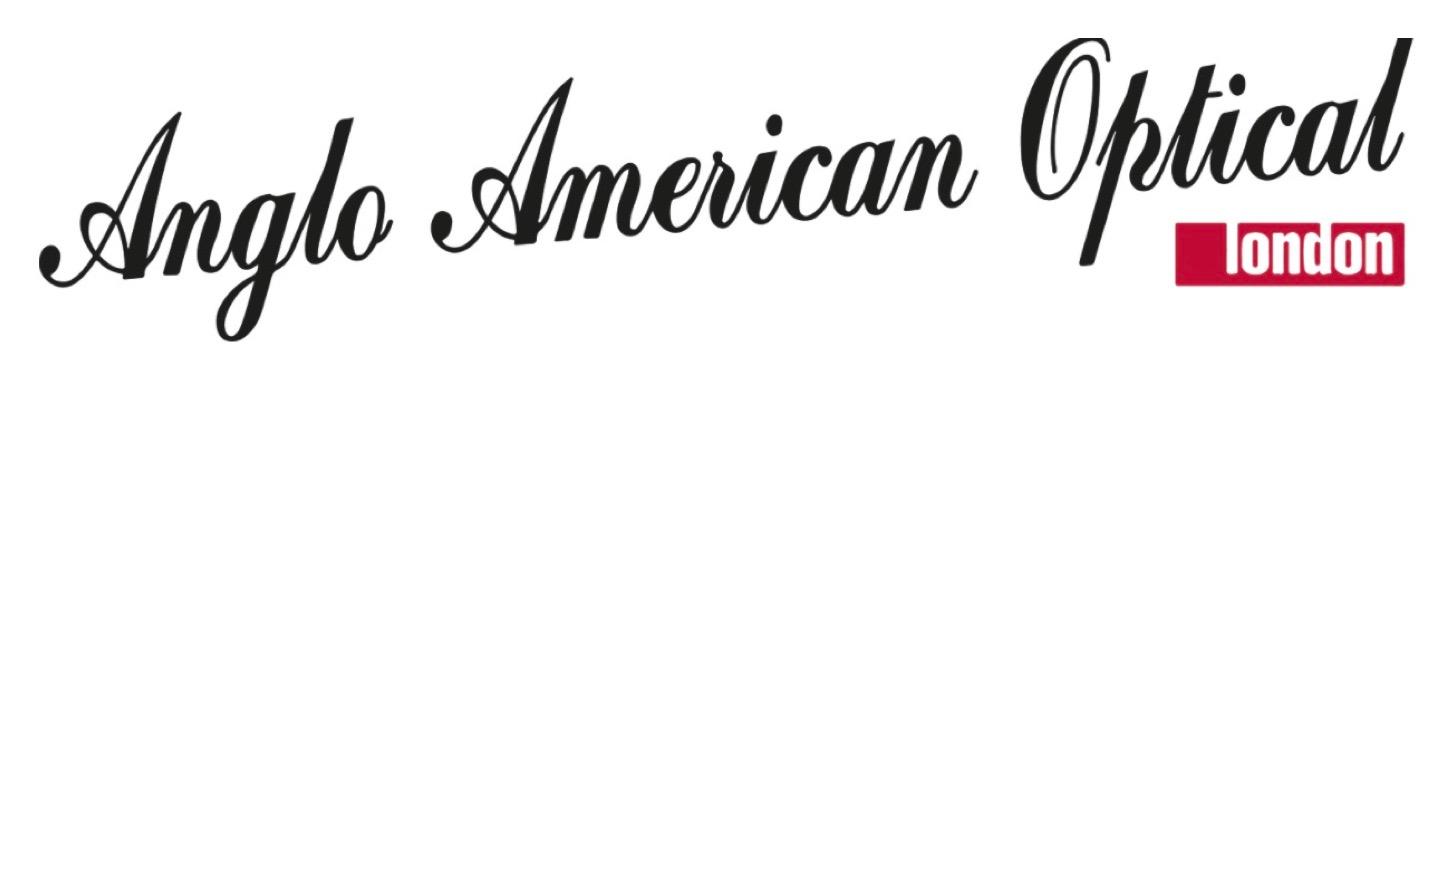 Anglo American Glasses